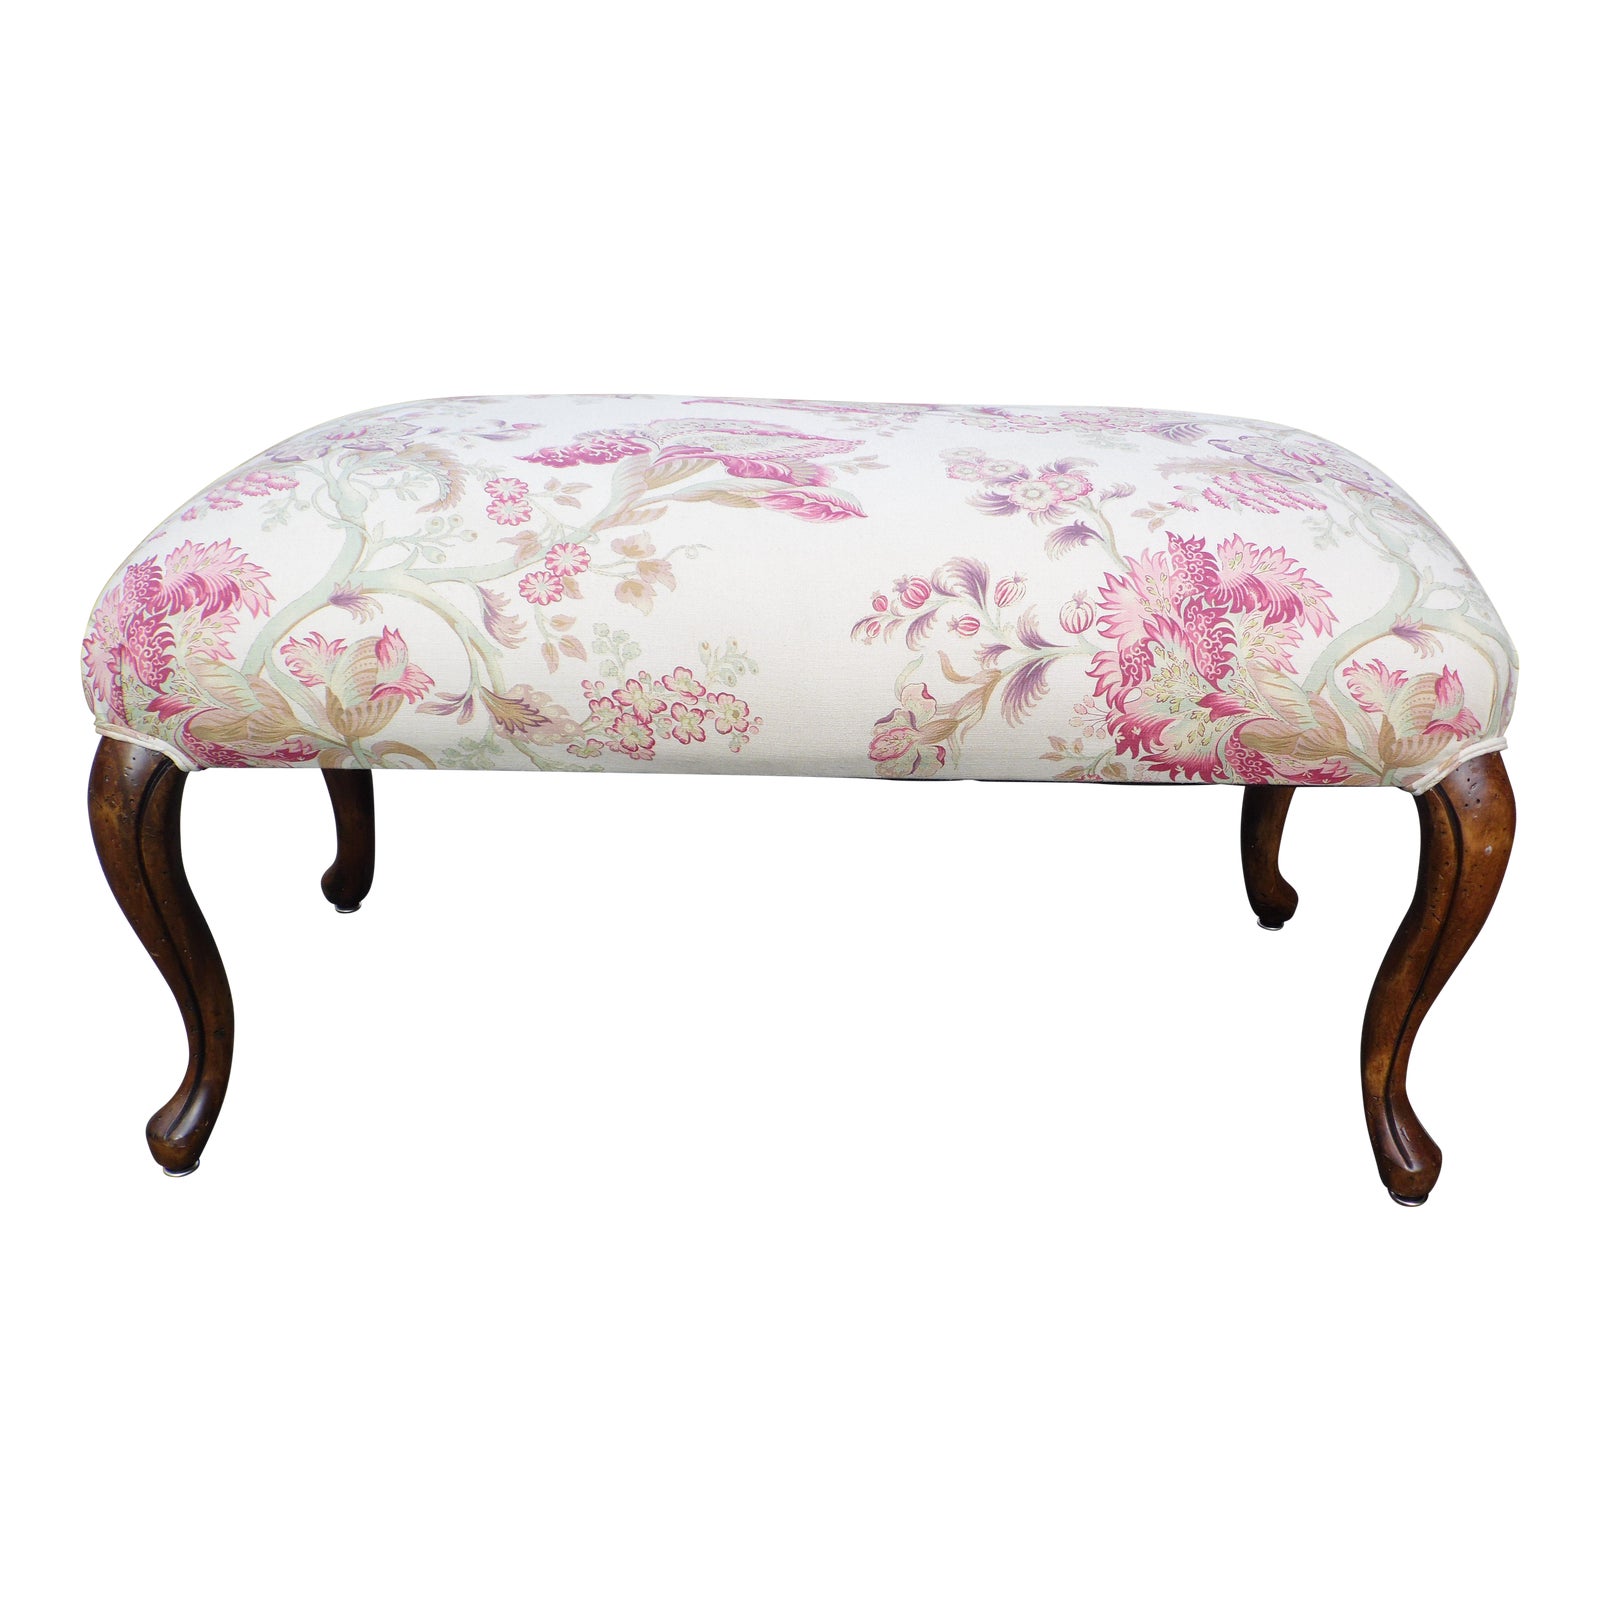 Vintage Upholstered Queen Anne Vanity, Vanity With Seat